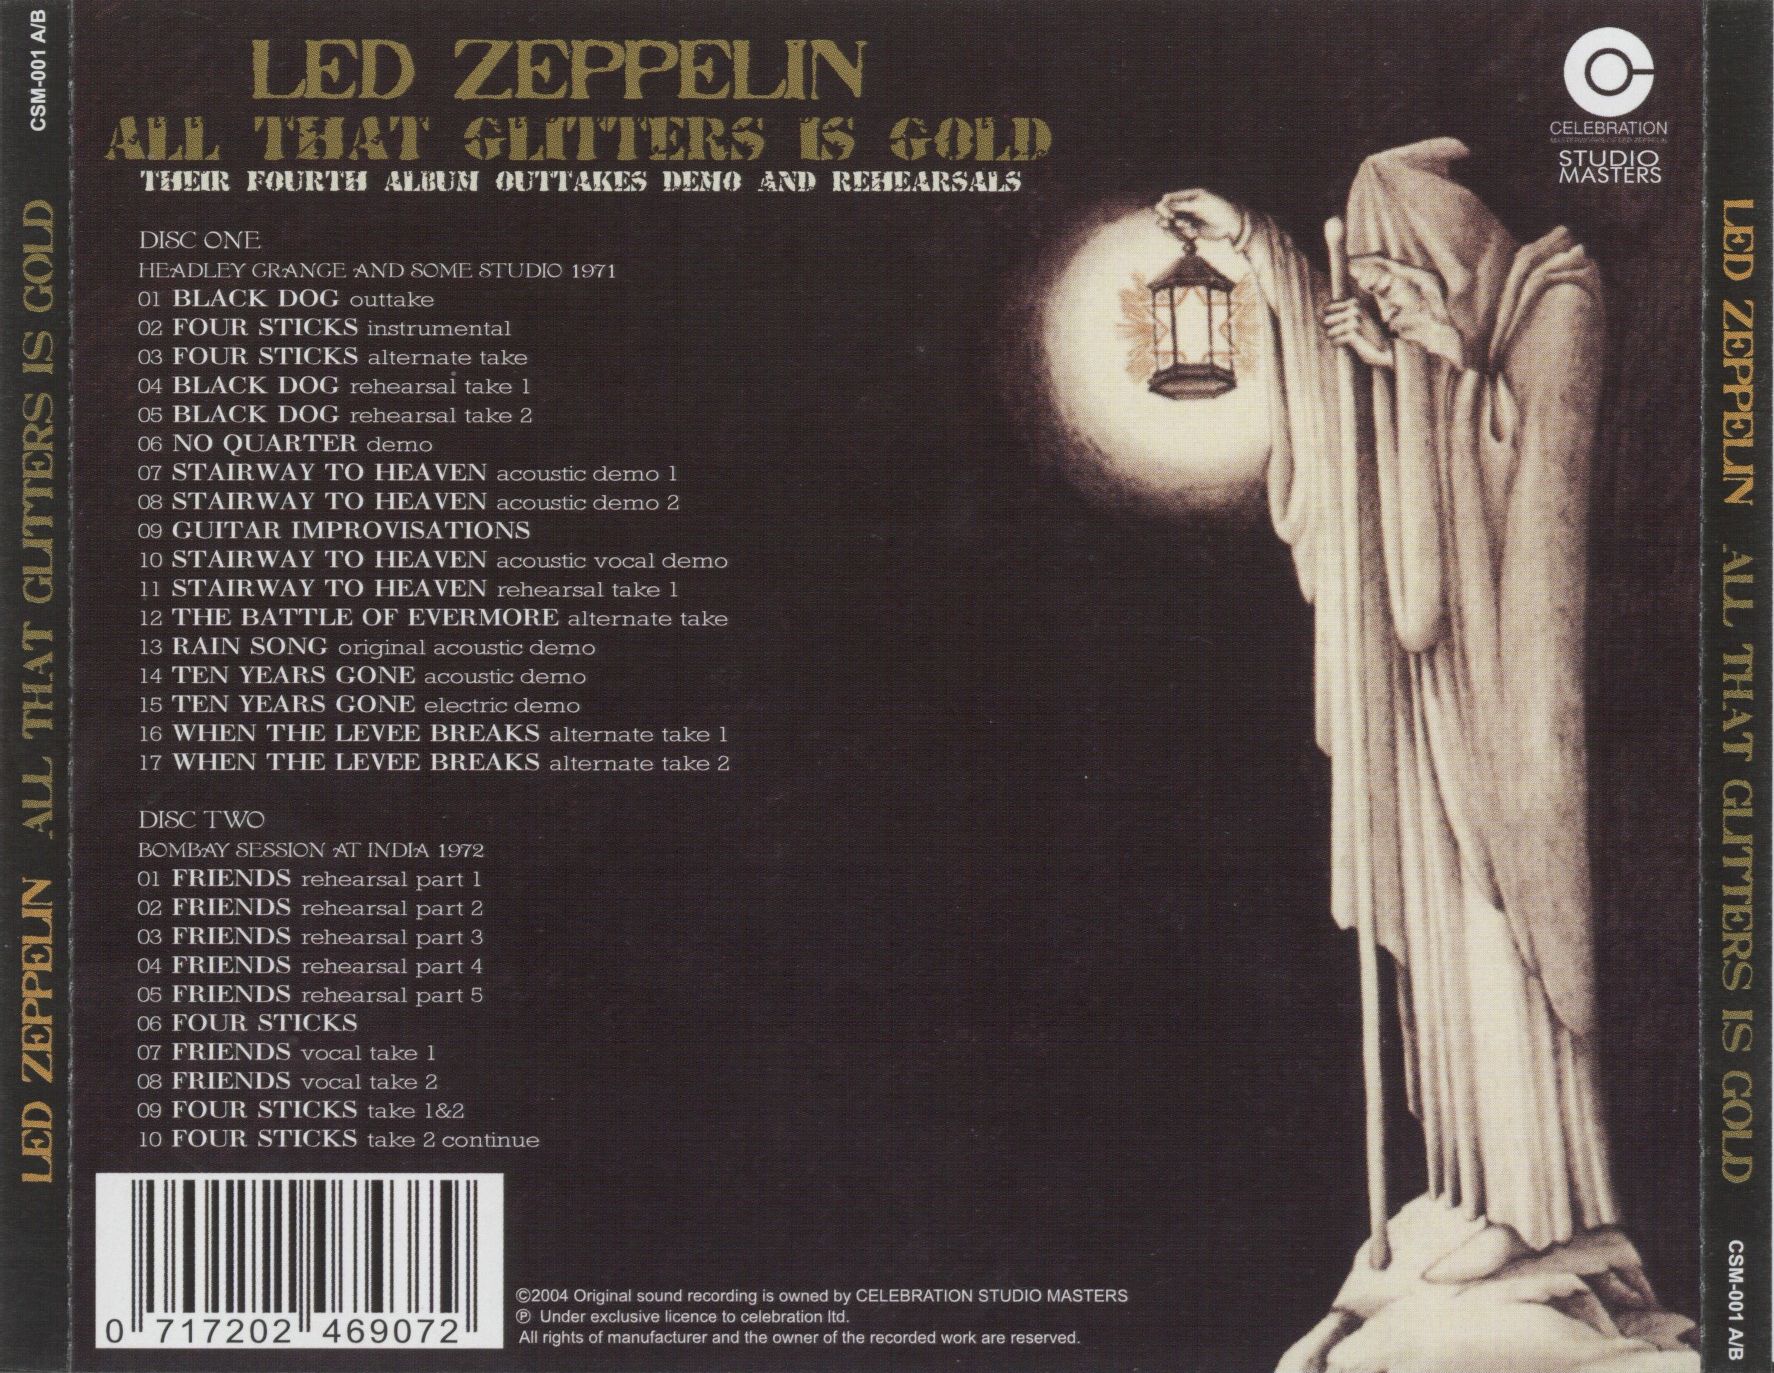 LedZeppelin1971AllThatGlittersFourthAlbumOuttakesAndRehearsals (1).jpg